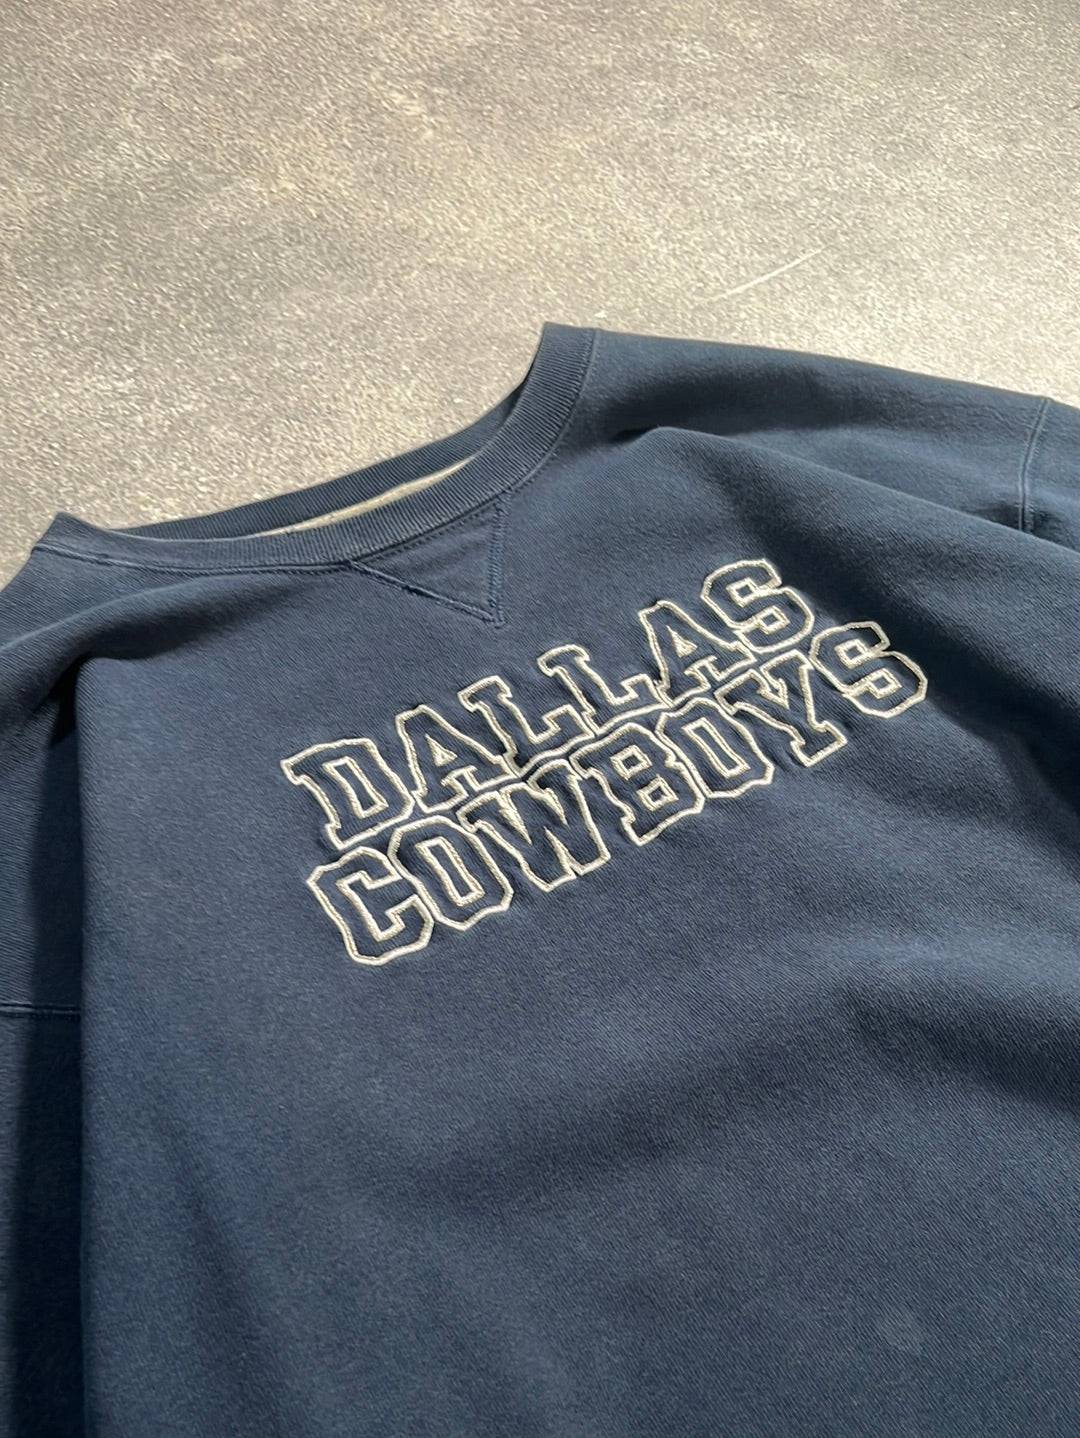 Vintage Dallas Cowboys Sweater Blue  // Large - RHAGHOUSE VINTAGE